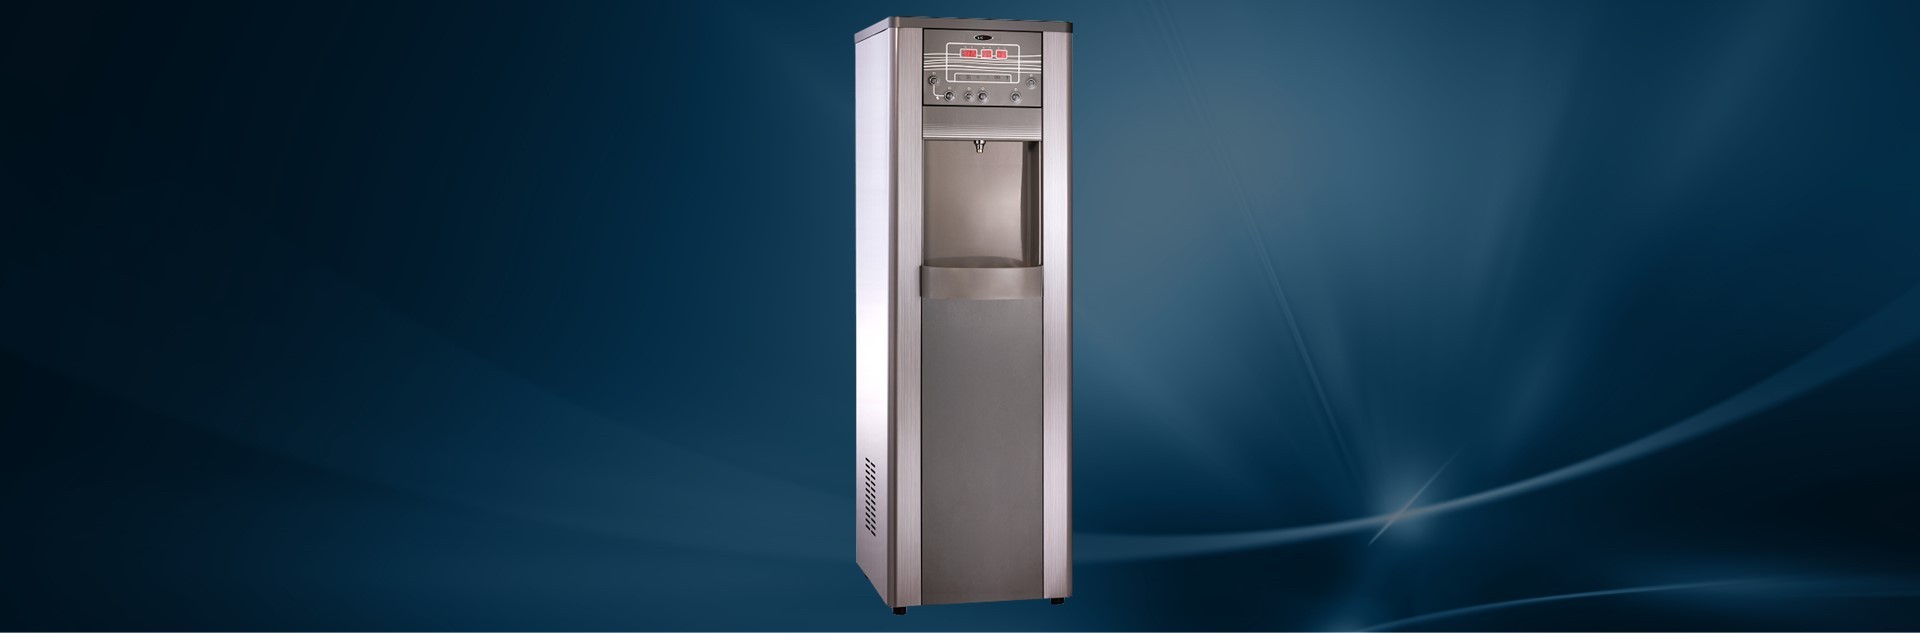 LC-6033 SeriesIntelligent Energy-Saving Water Dispenser